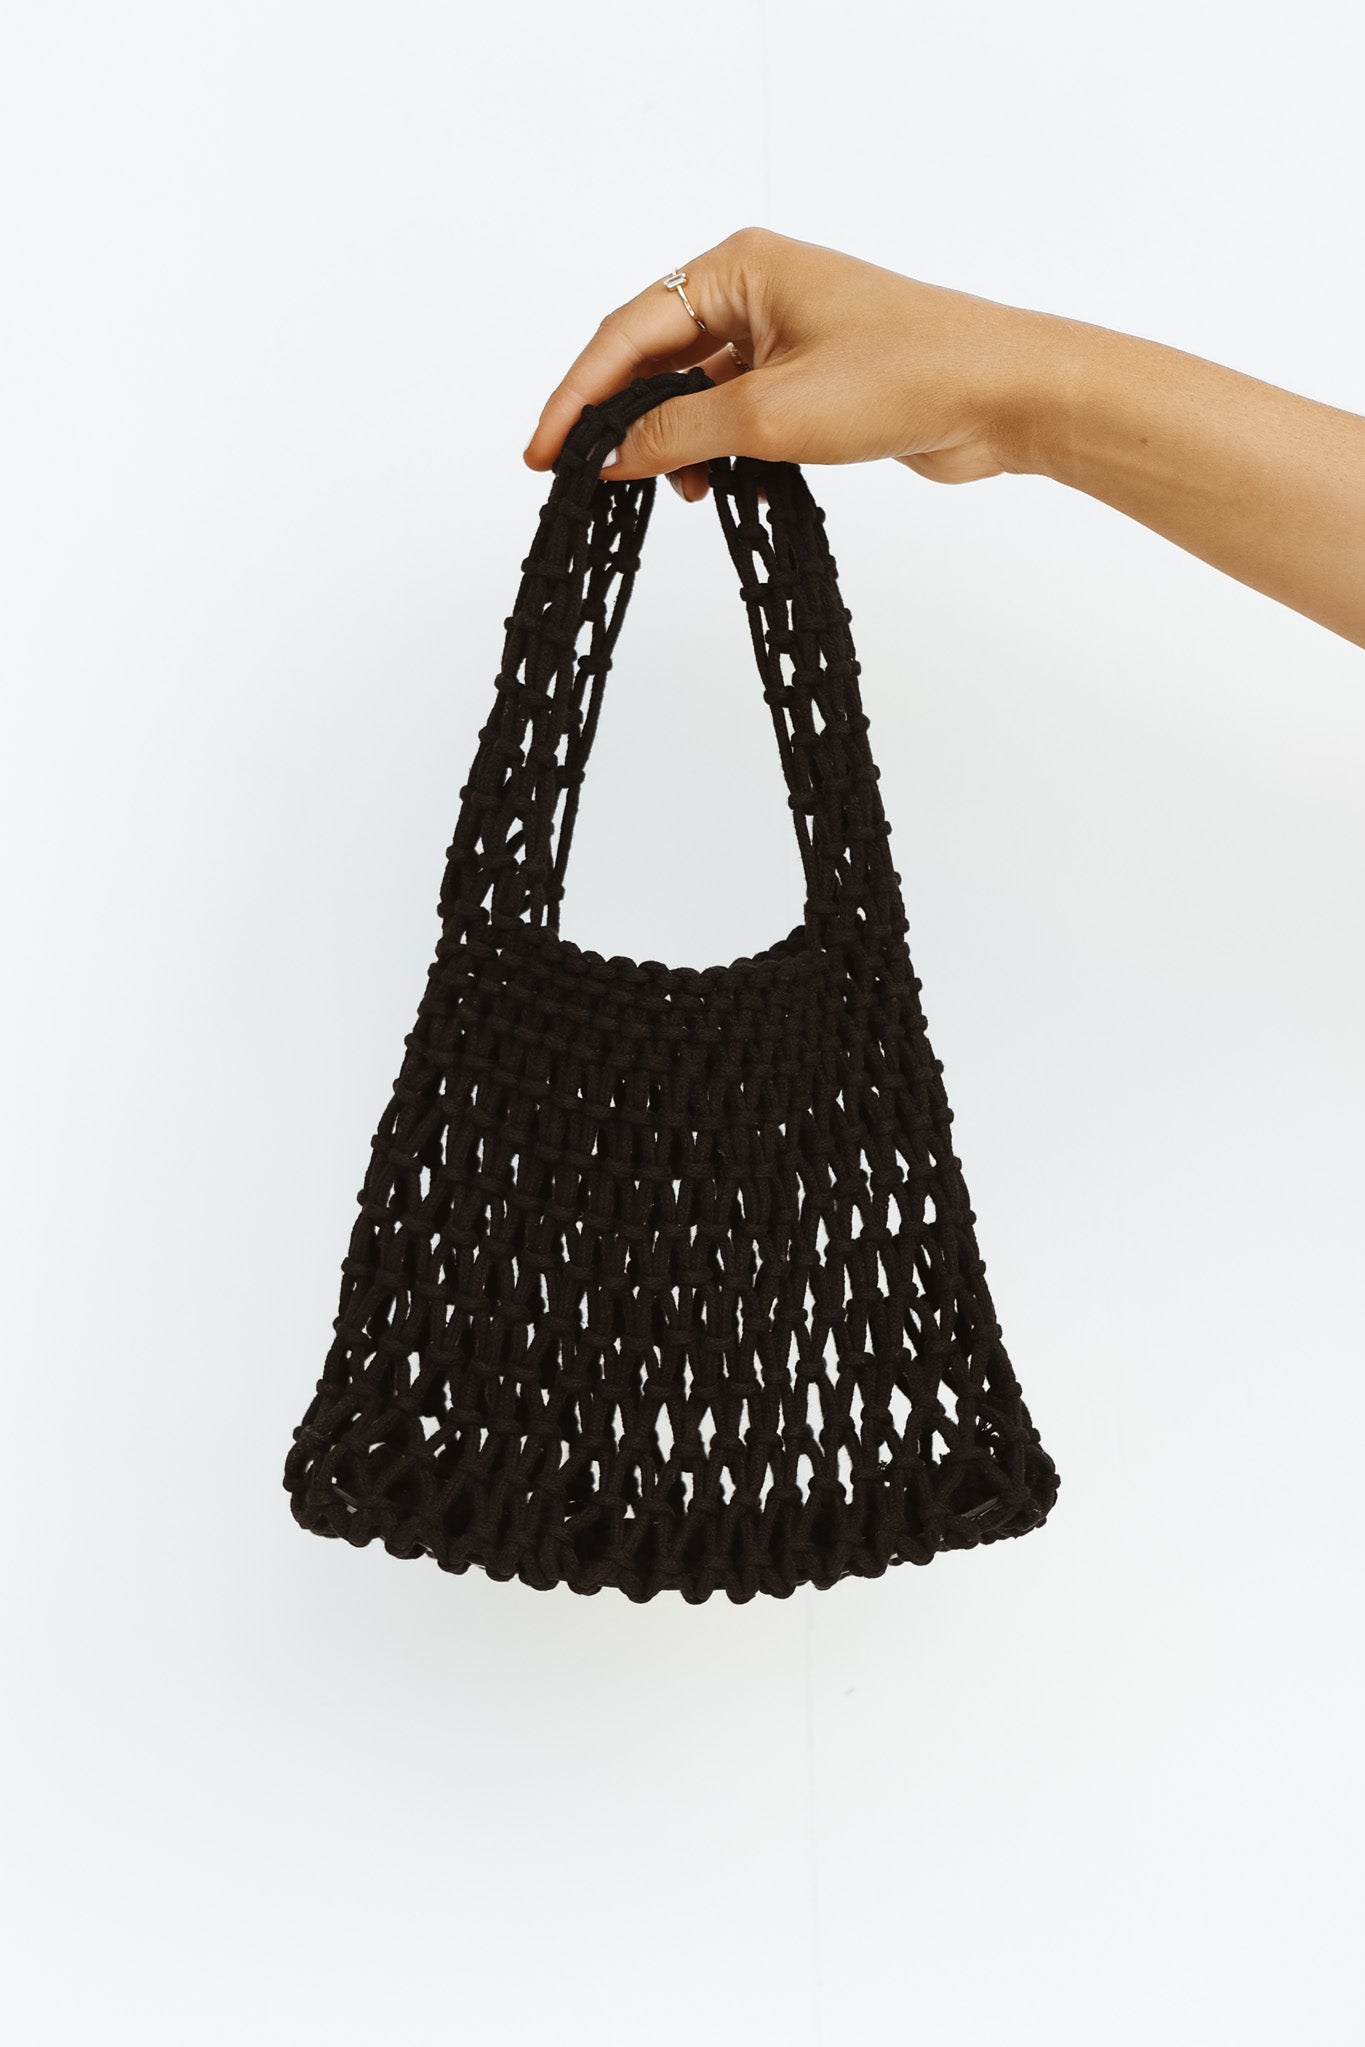 Cleo Crochet Bag (Black)